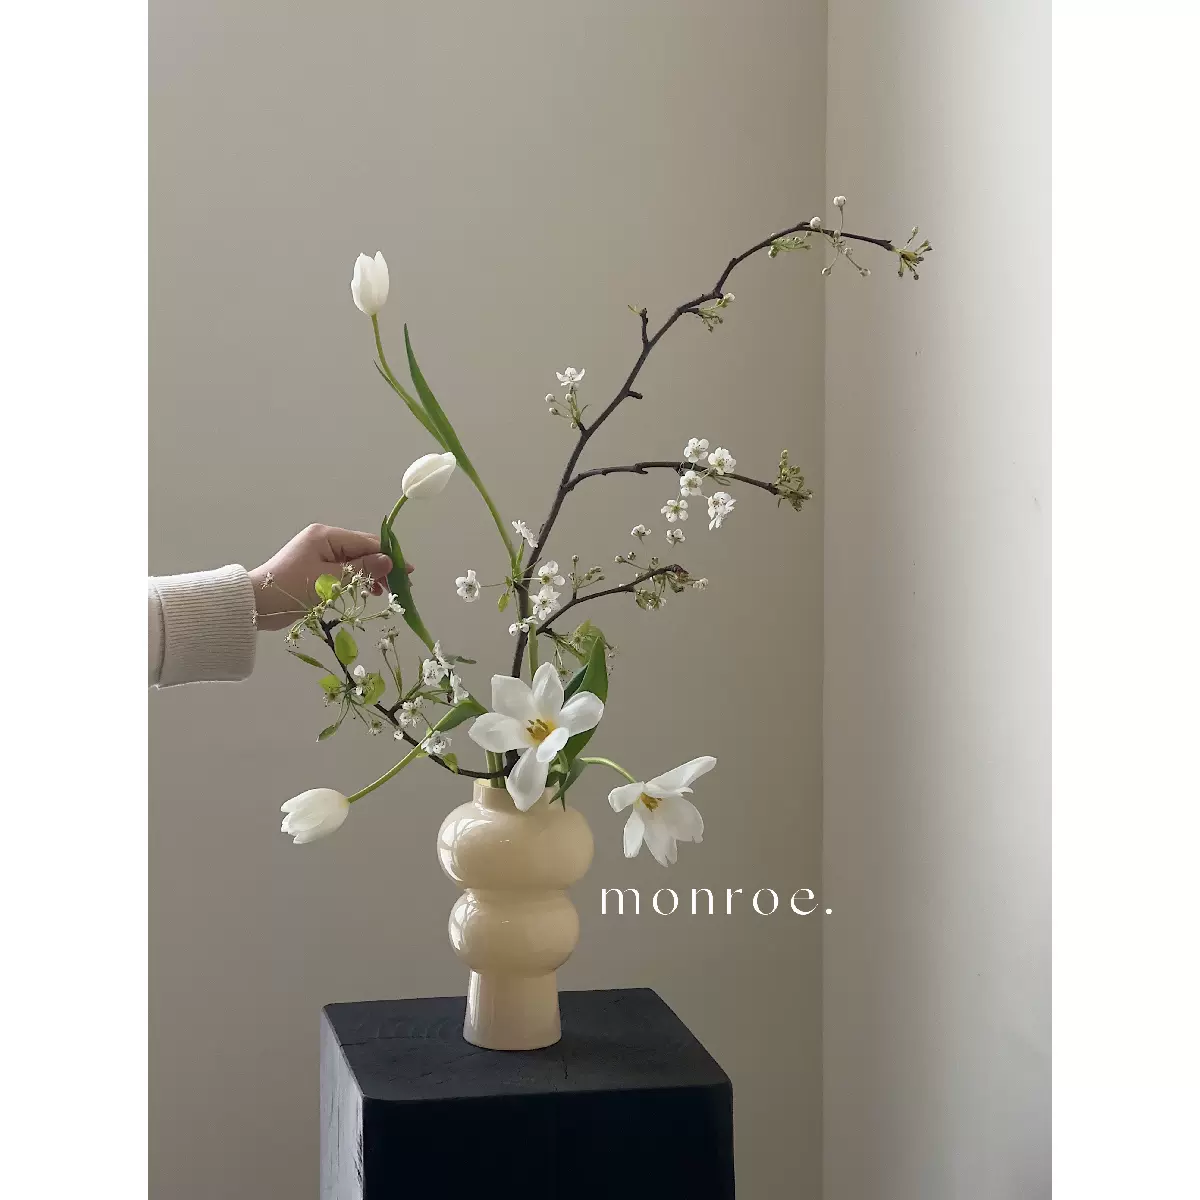 monroe夢鹿工作室樂高10280花束鮮花玫瑰40460陶瓷花瓶10289花器-Taobao